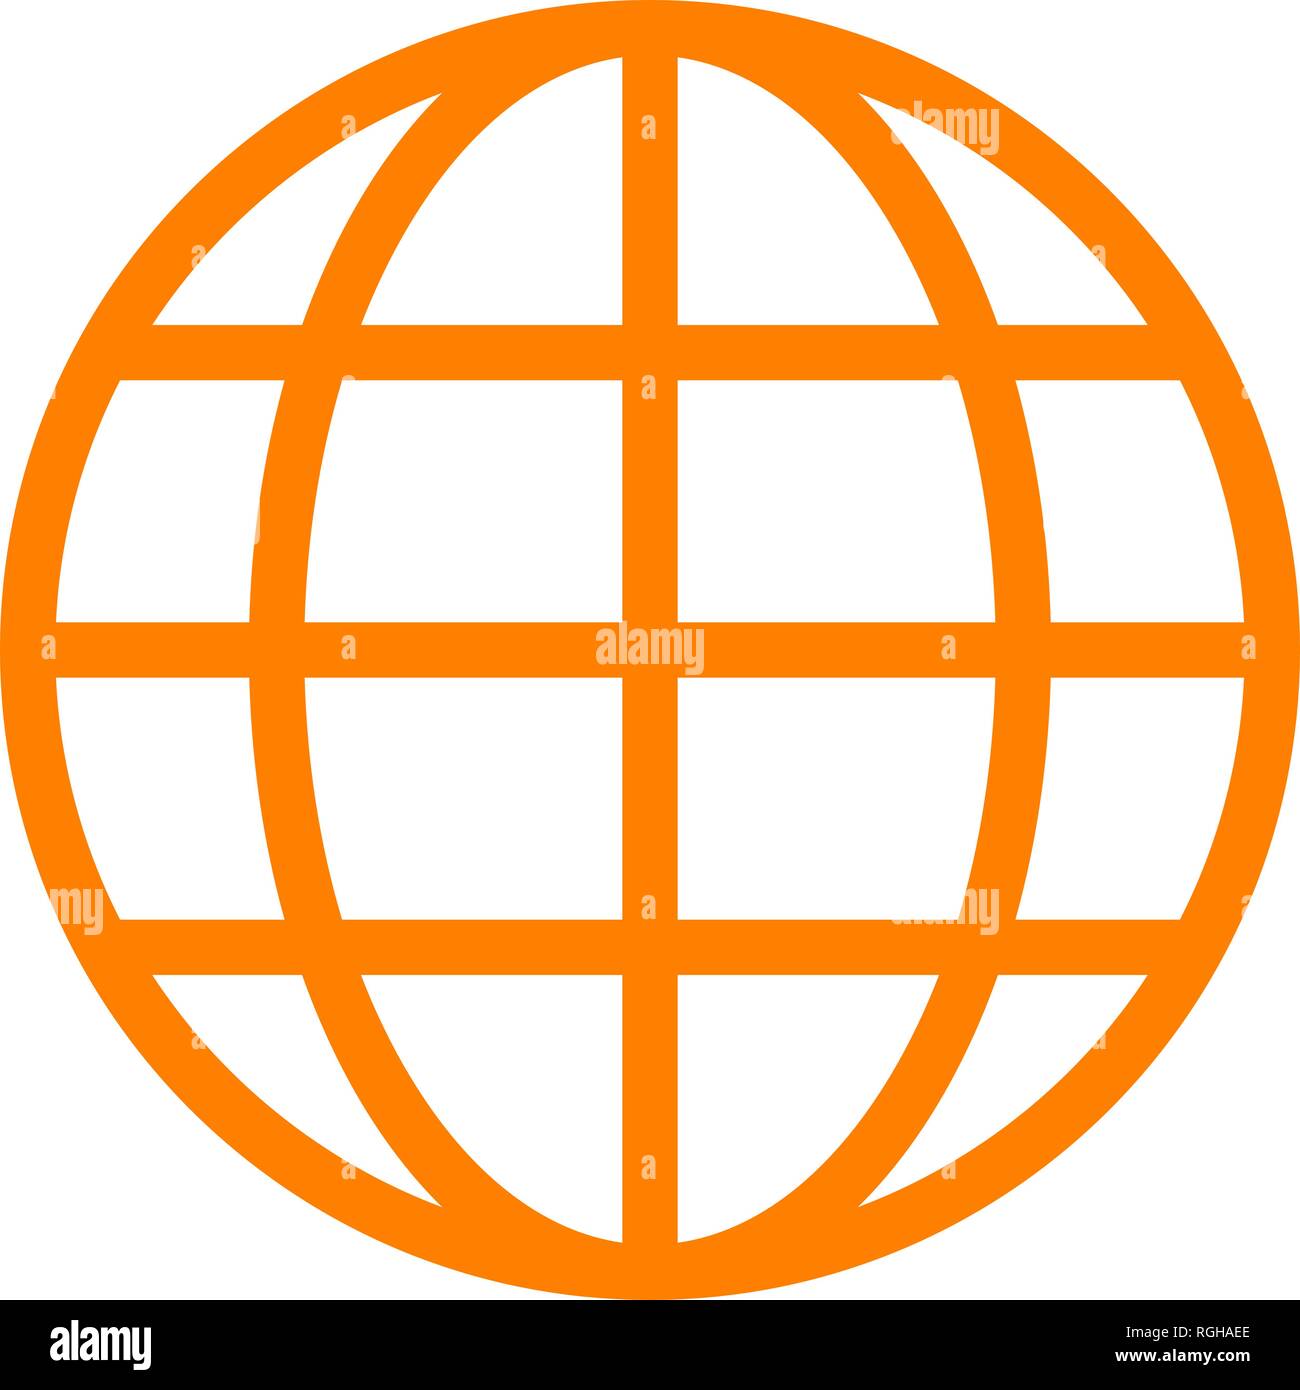 Globe symbol icon - orange simple, isolated - vector illustration Stock Vector